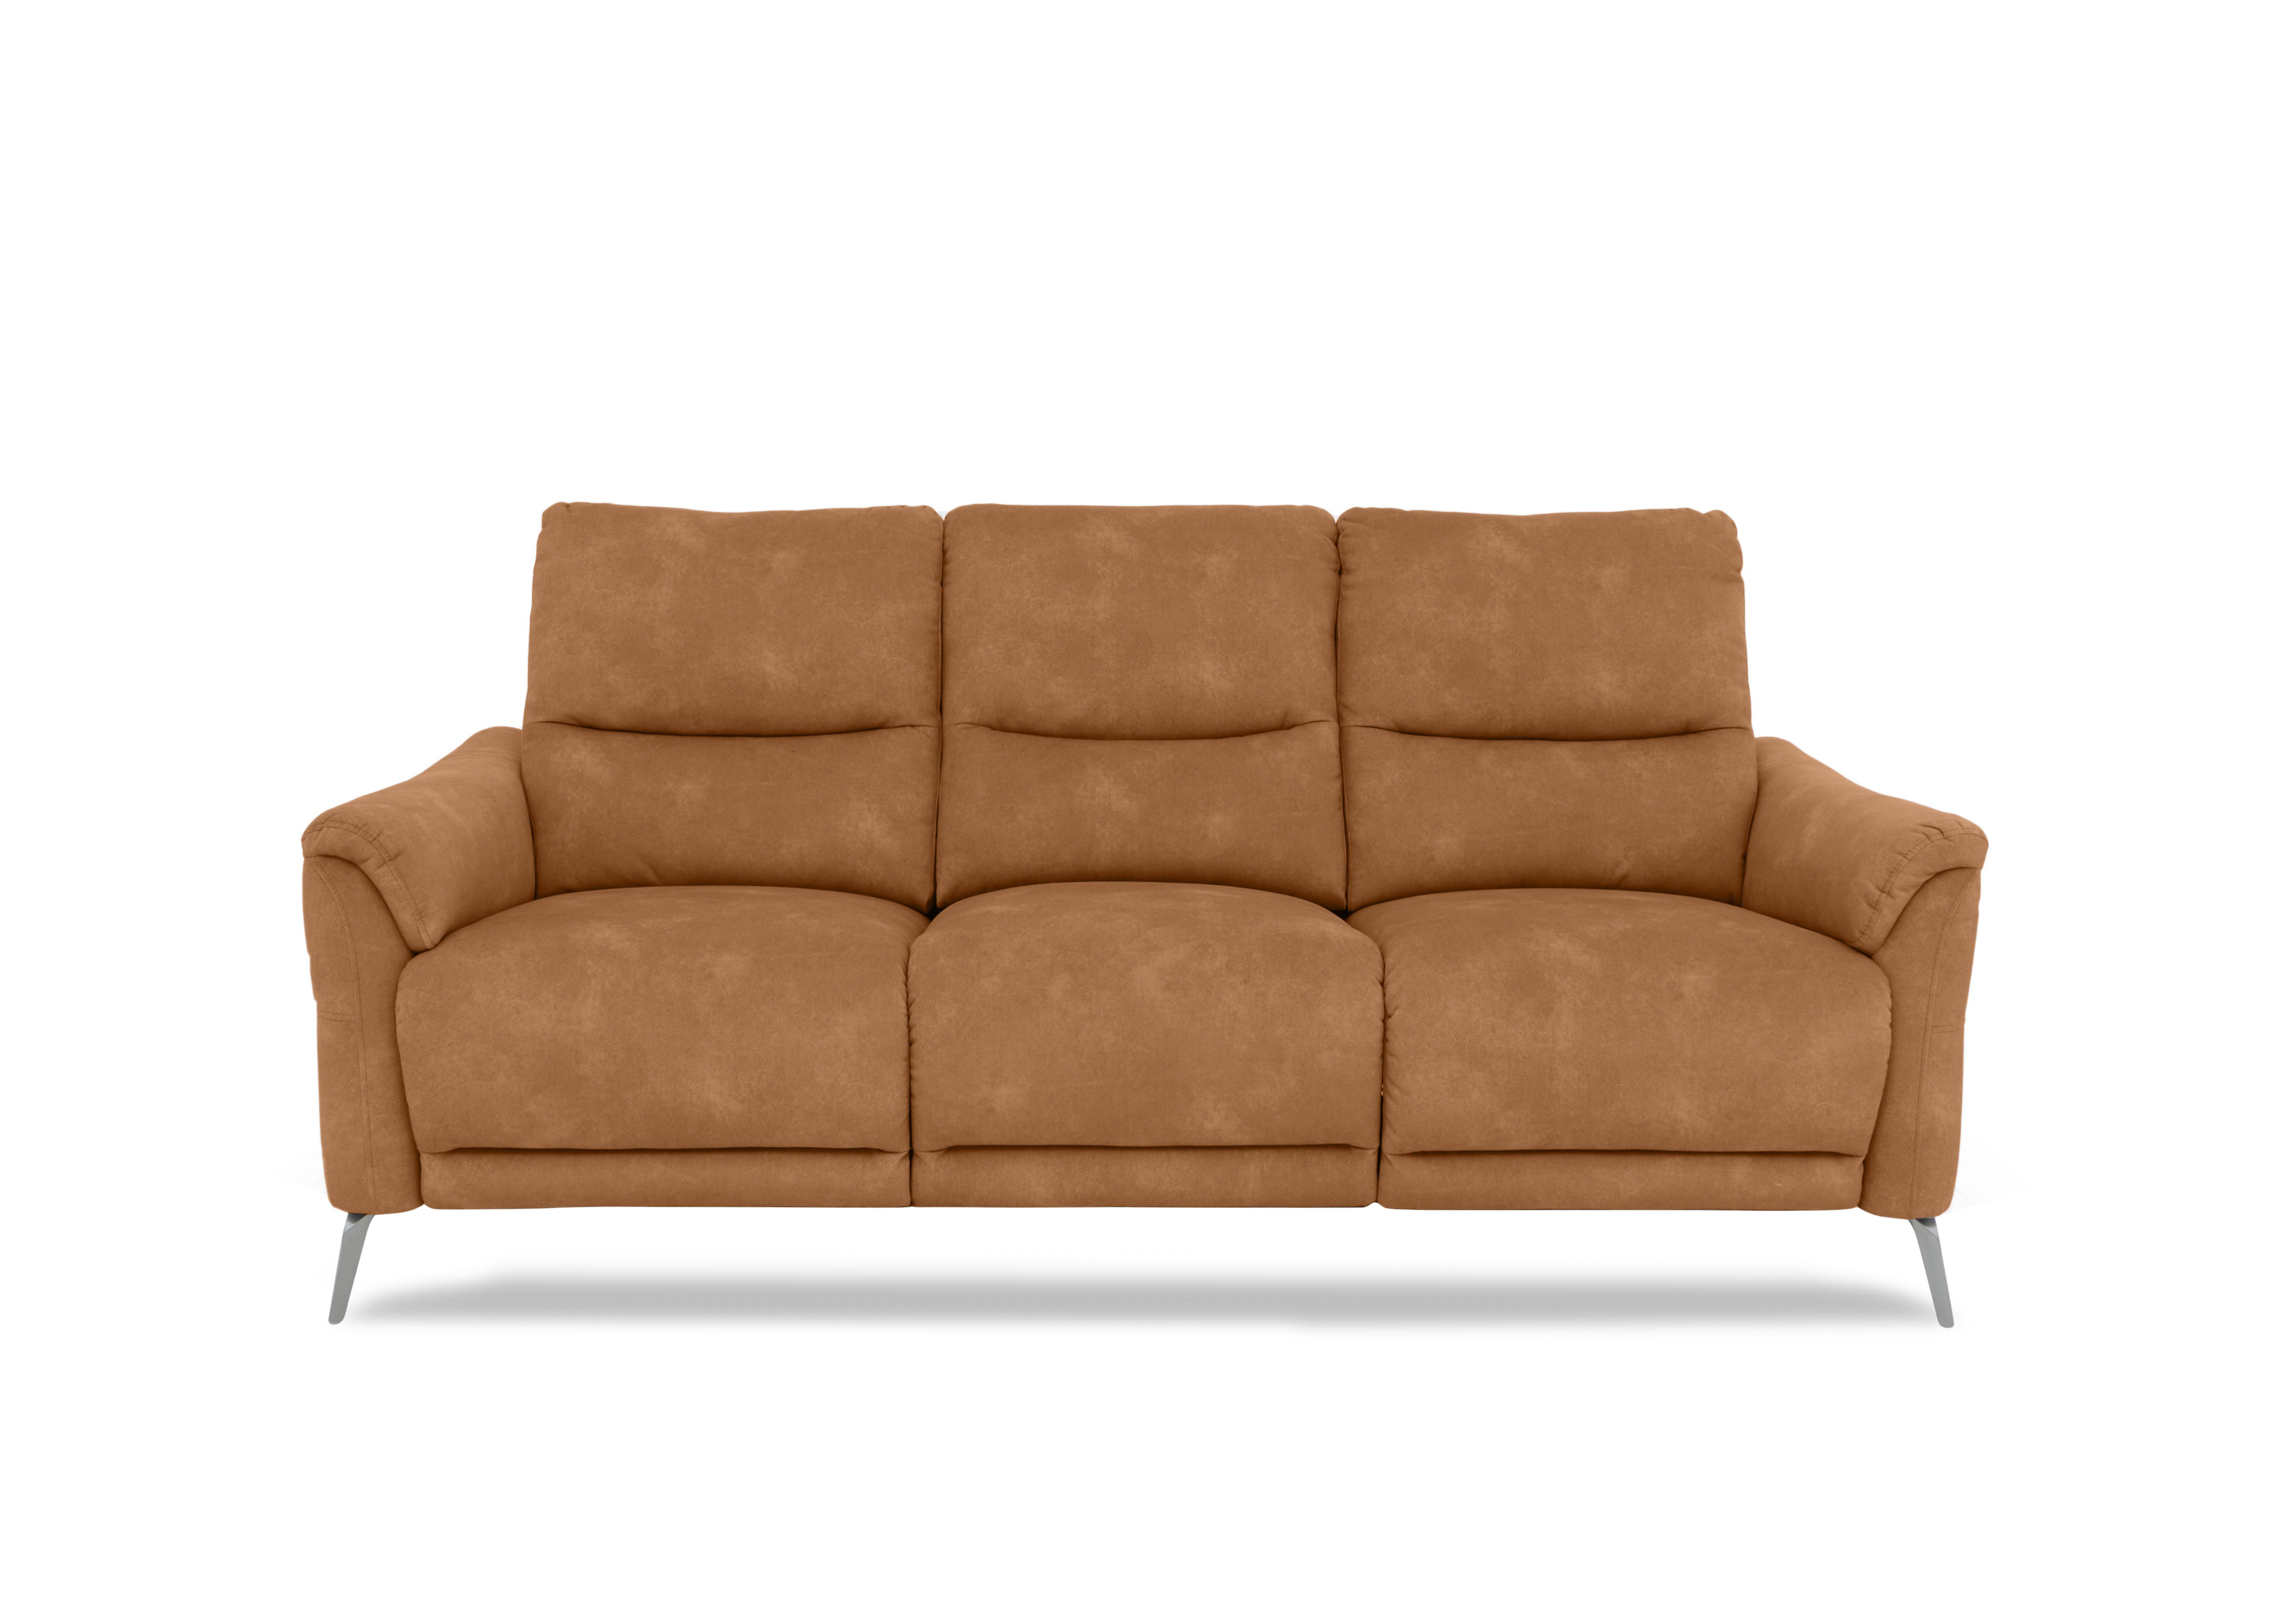 Daytona 3 Seater Fabric Sofa in 43509 Dexter Pumpkin on Furniture Village